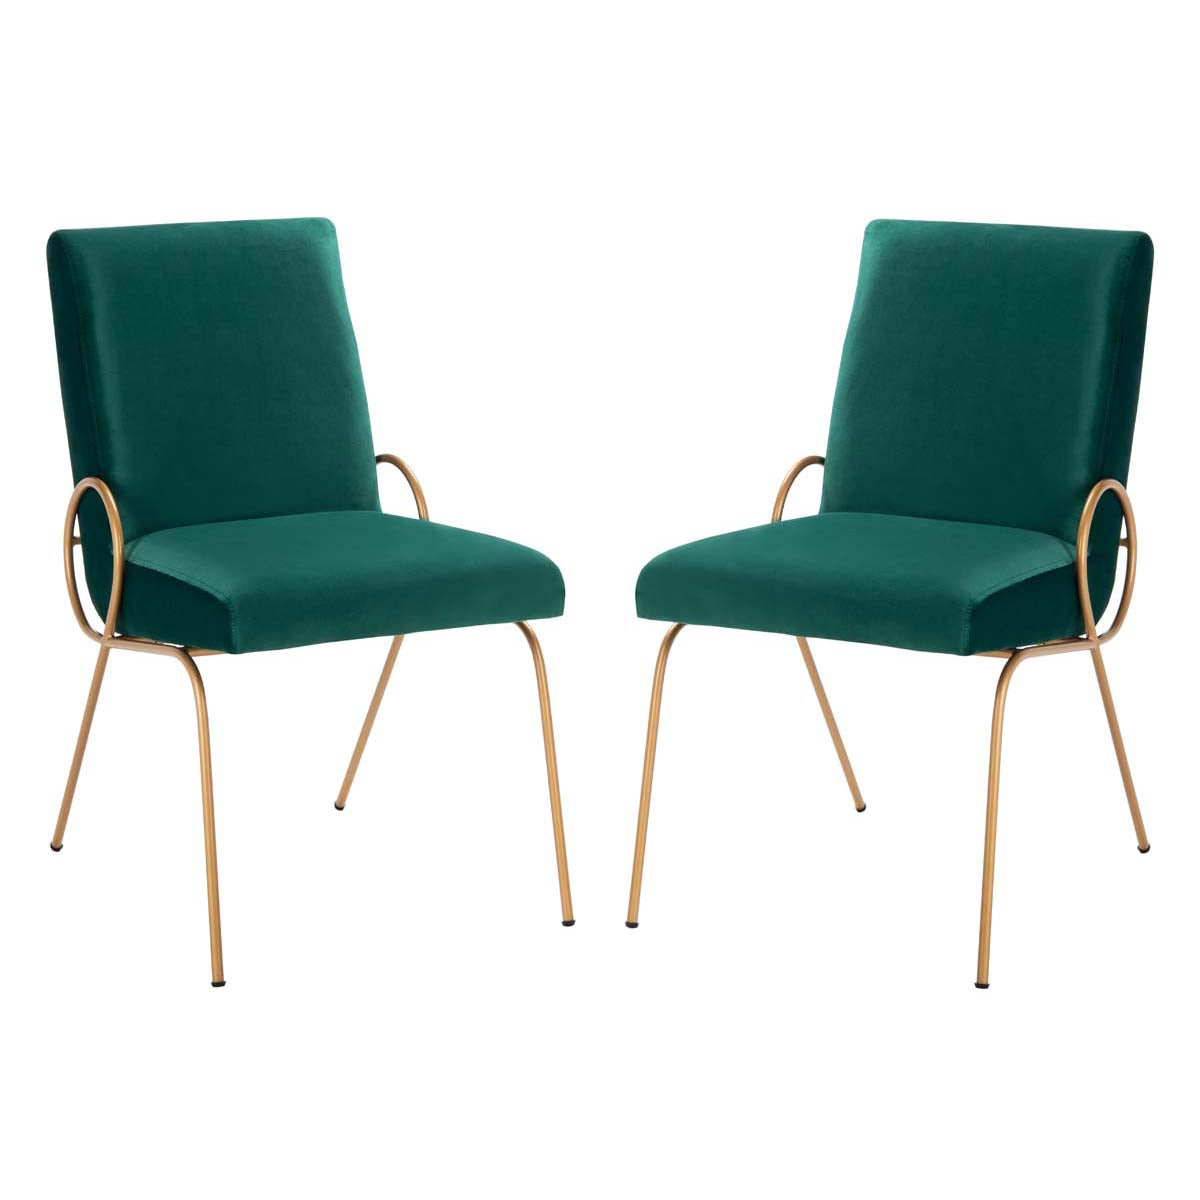 Safavieh Fanlia Side Chair , ACH6207 - Emerald / Gold (Set of 2)